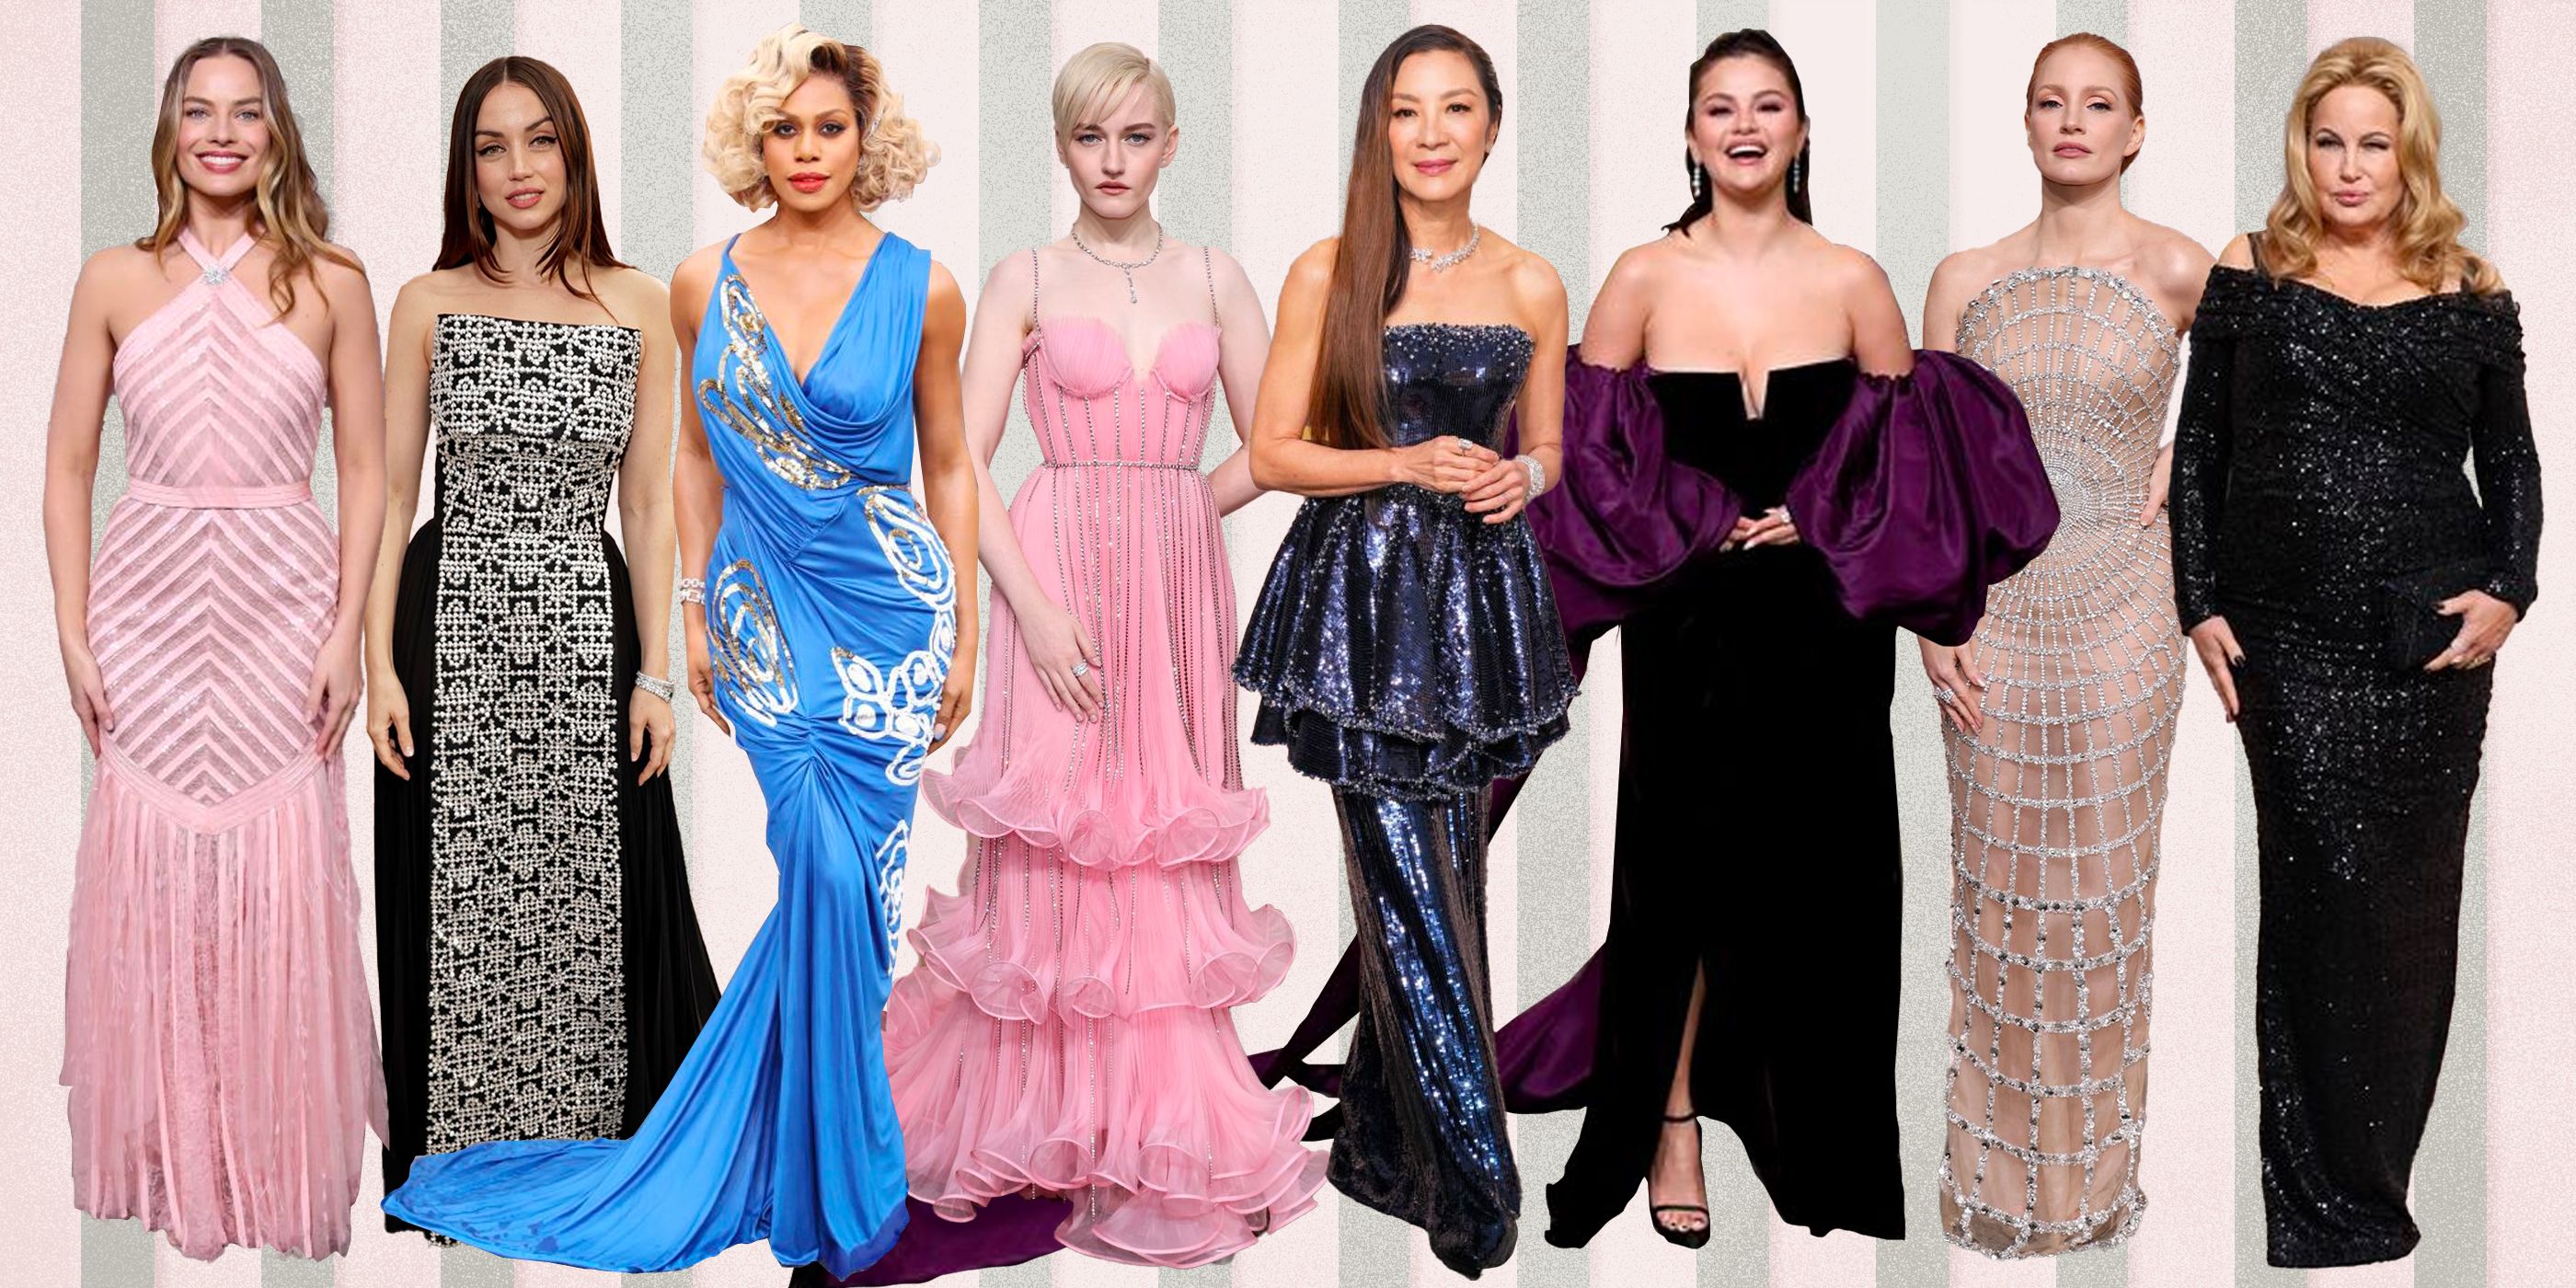 Best Dressed Celebrities Golden Globes 2023 Red Carpet - Fashionista